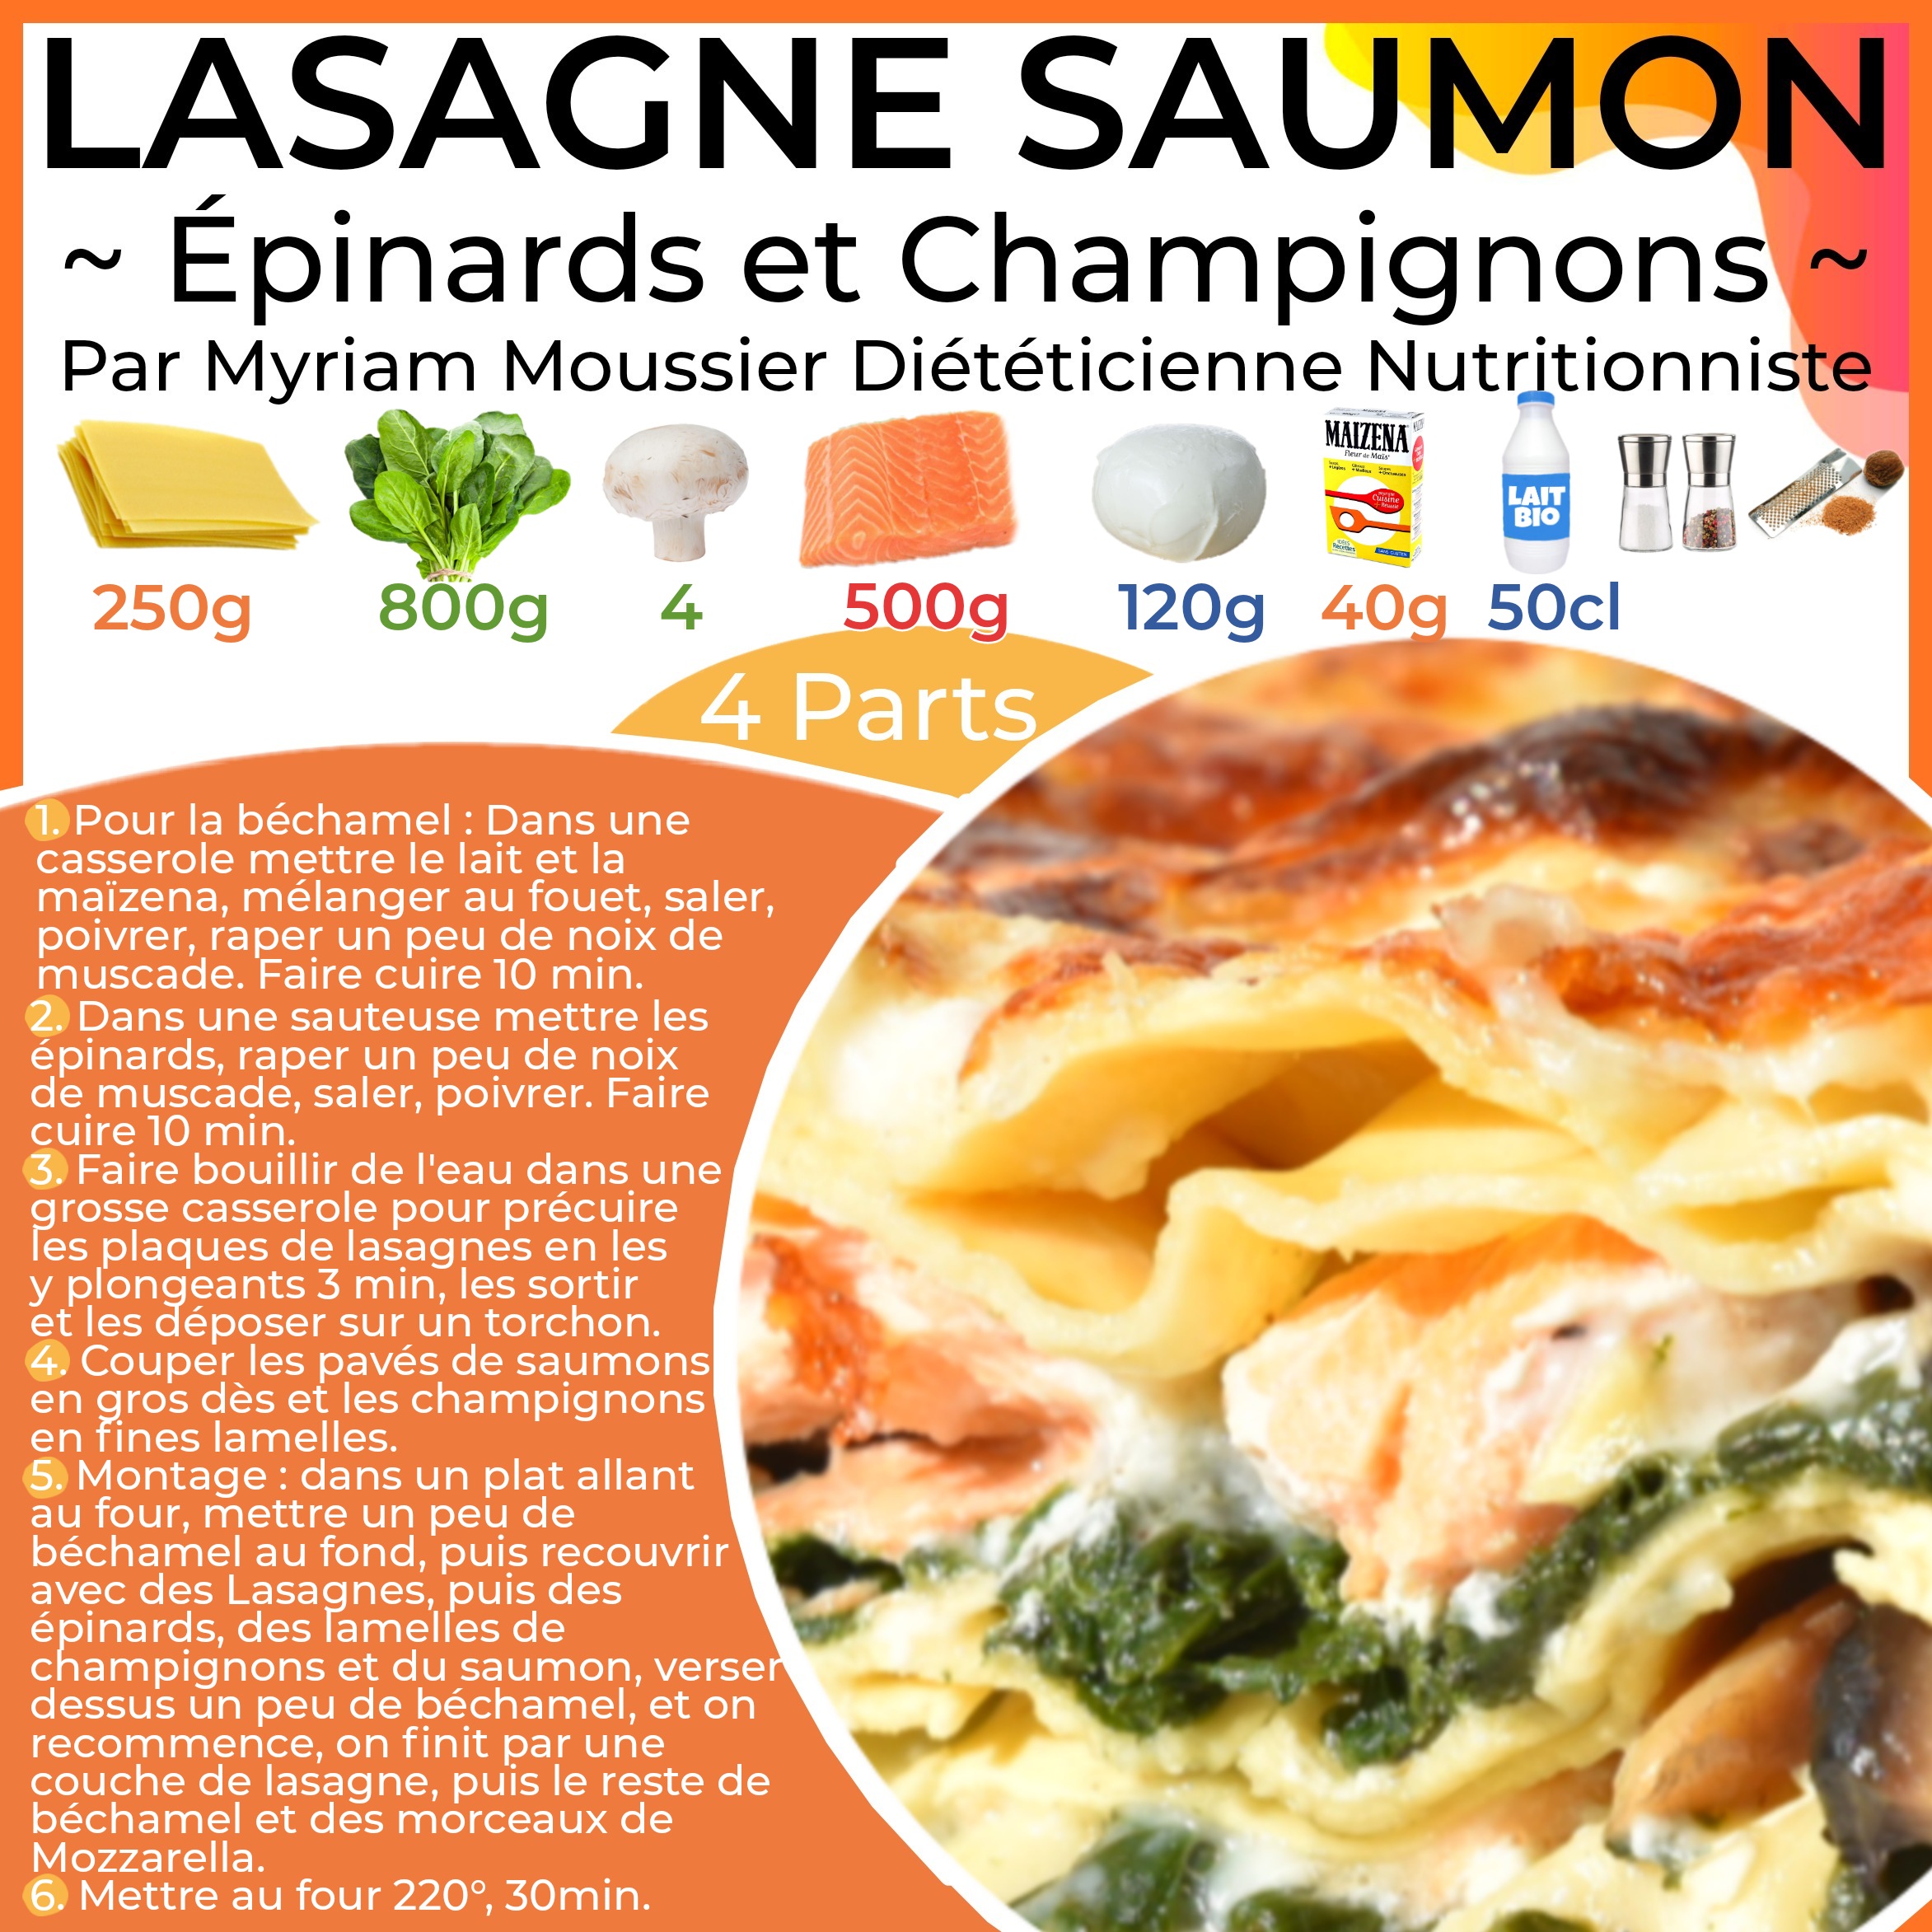 Lasagne saumon